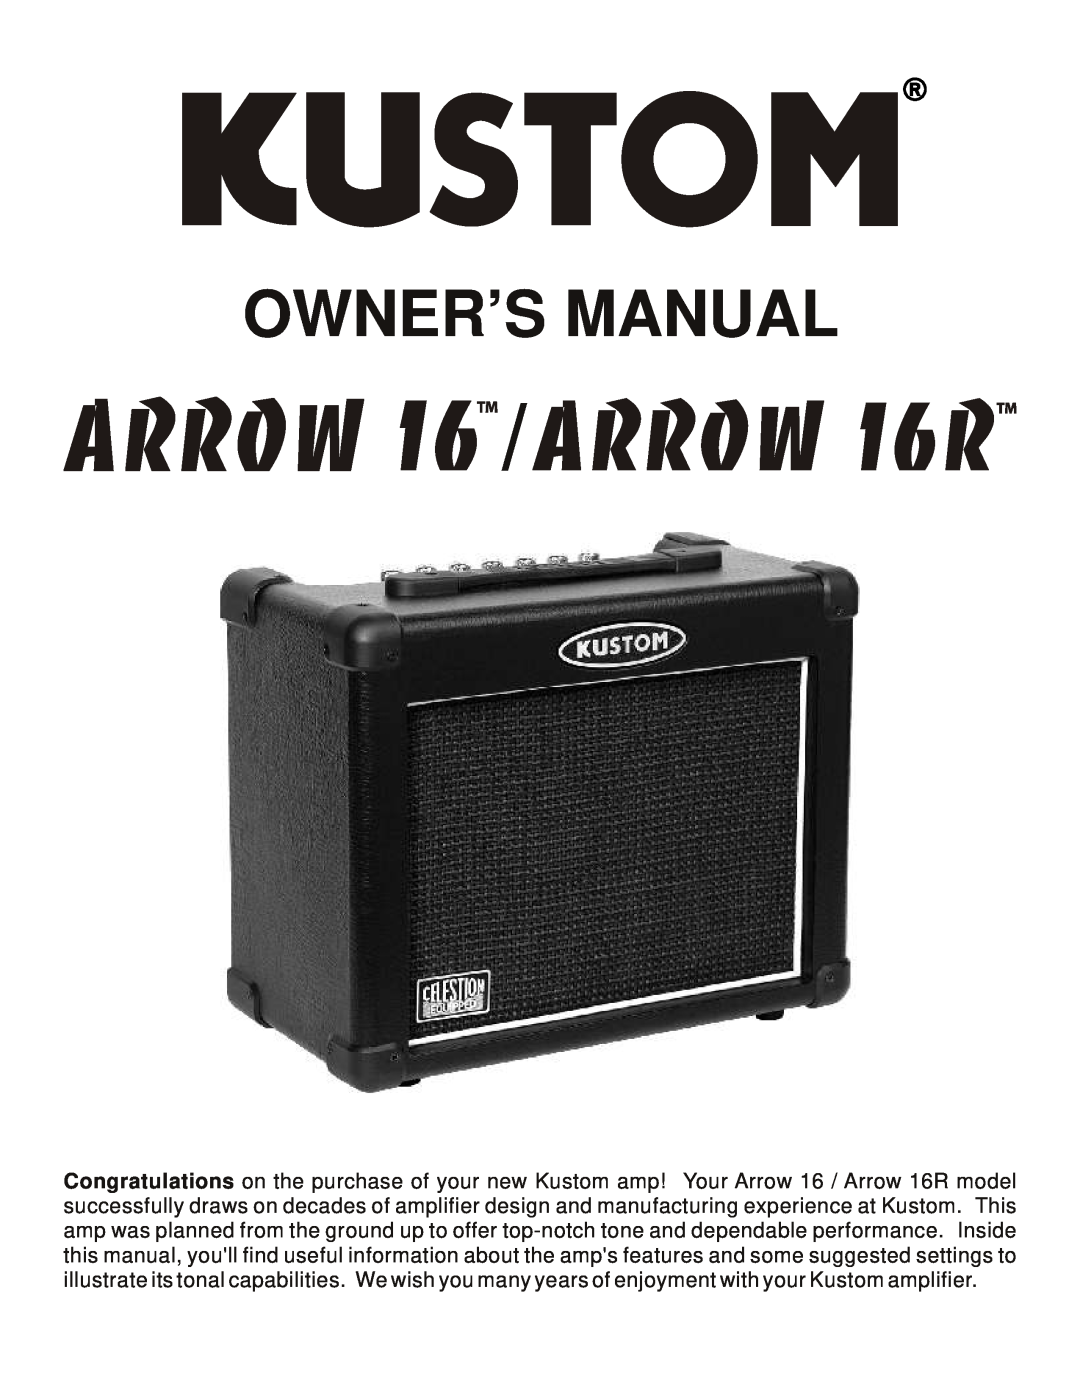 Kustom Arrow 16R owner manual 